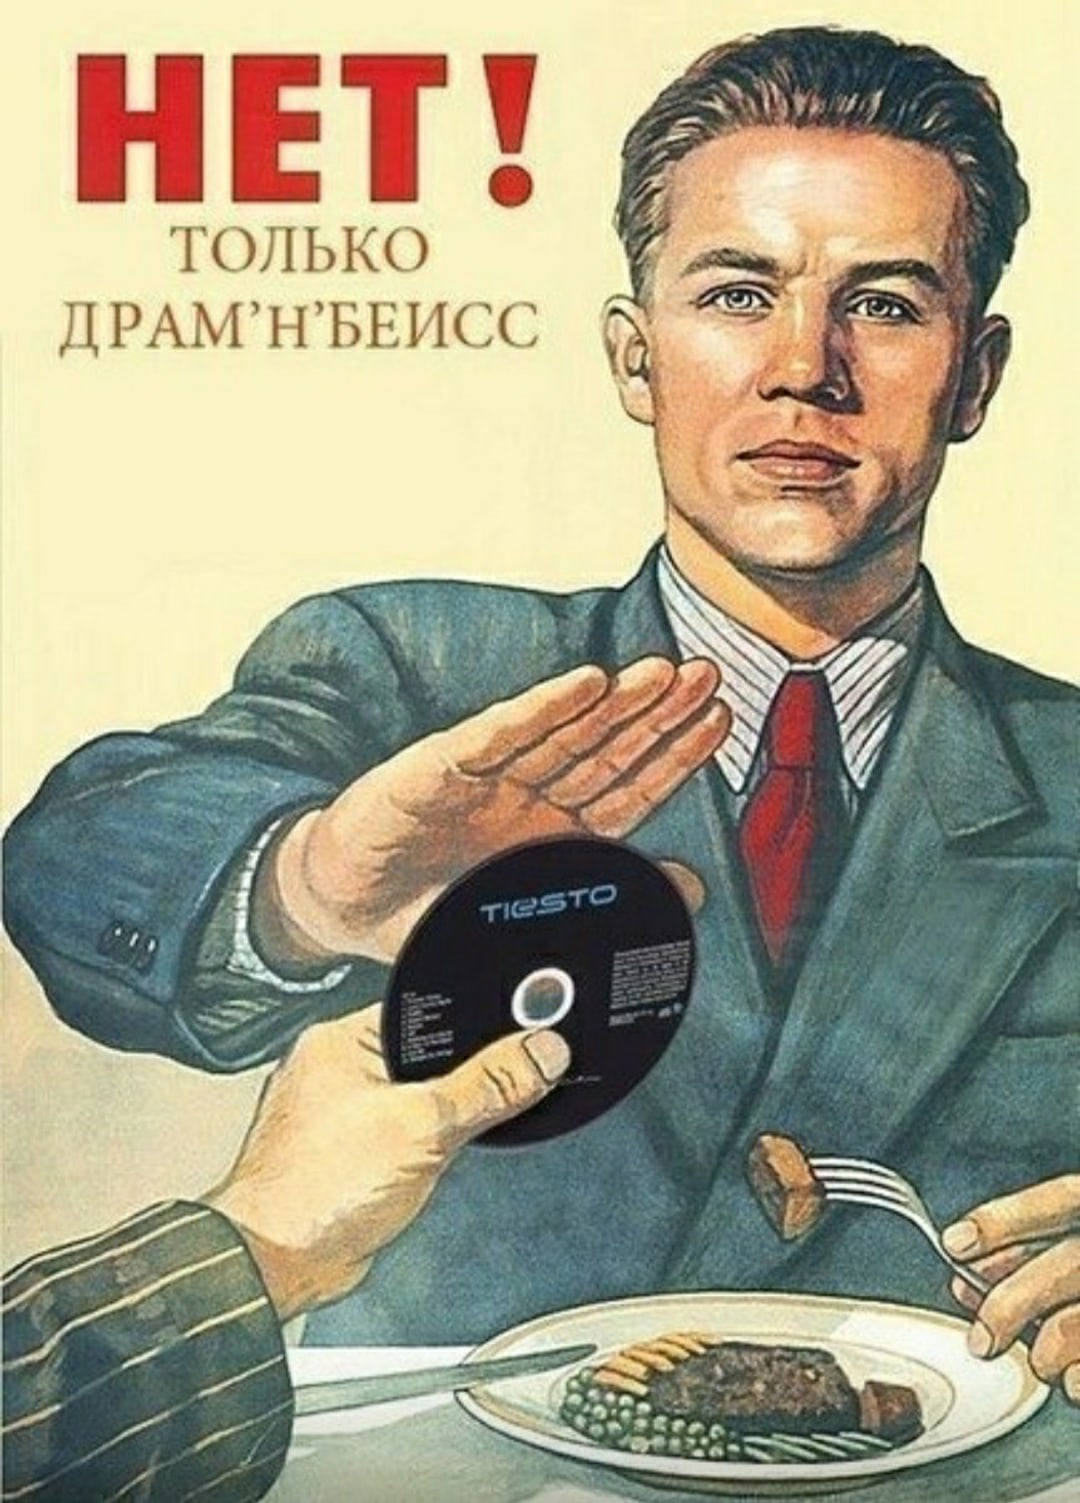 Плакат СССР да алкоголю